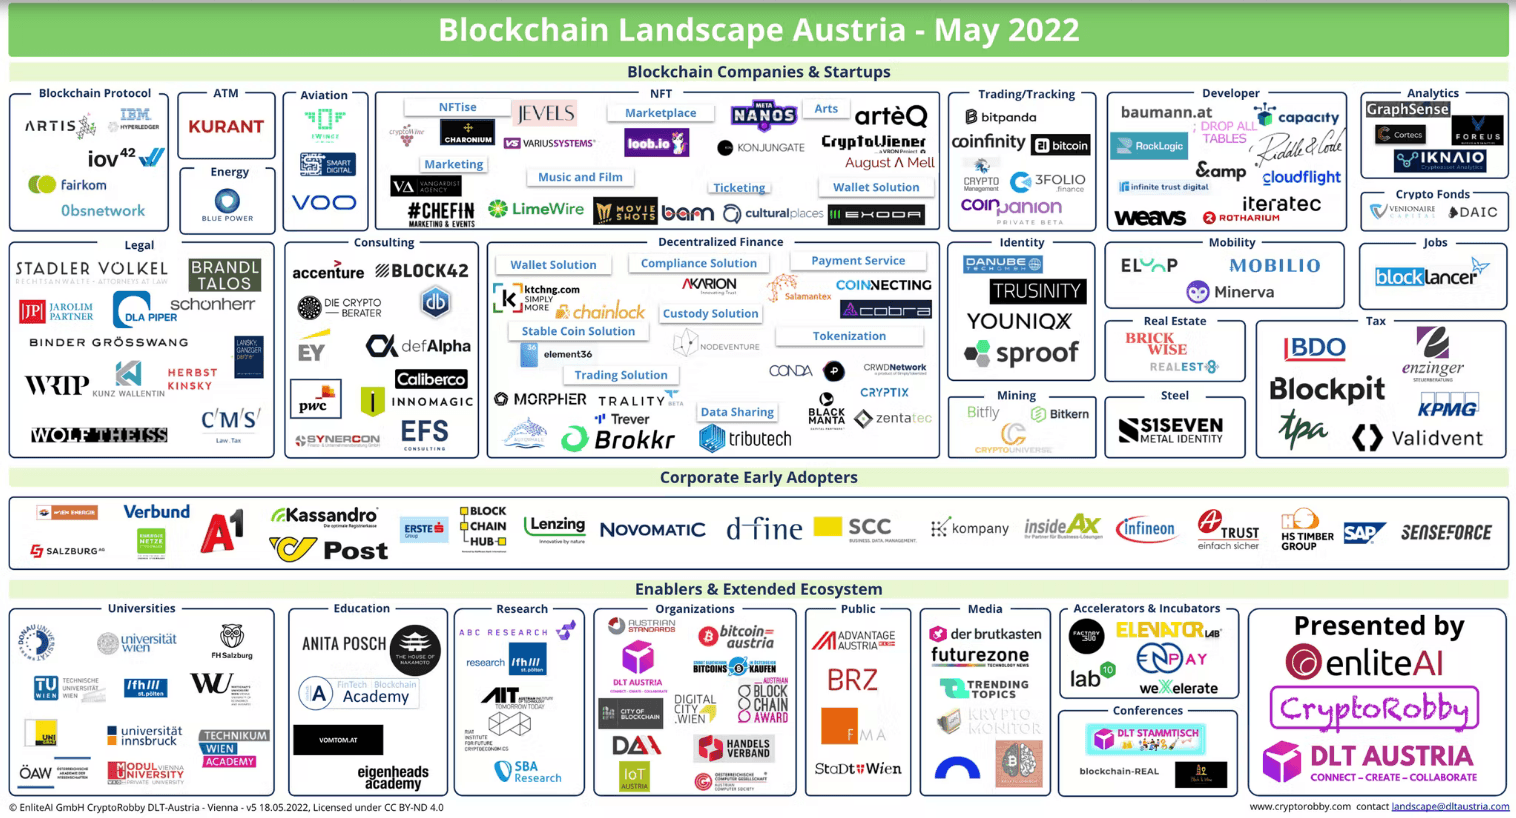 Blockchain Landscape Austria – May 2022 – STADLER VÖLKEL listed in "Blockchain Companies & Startups – Legal"